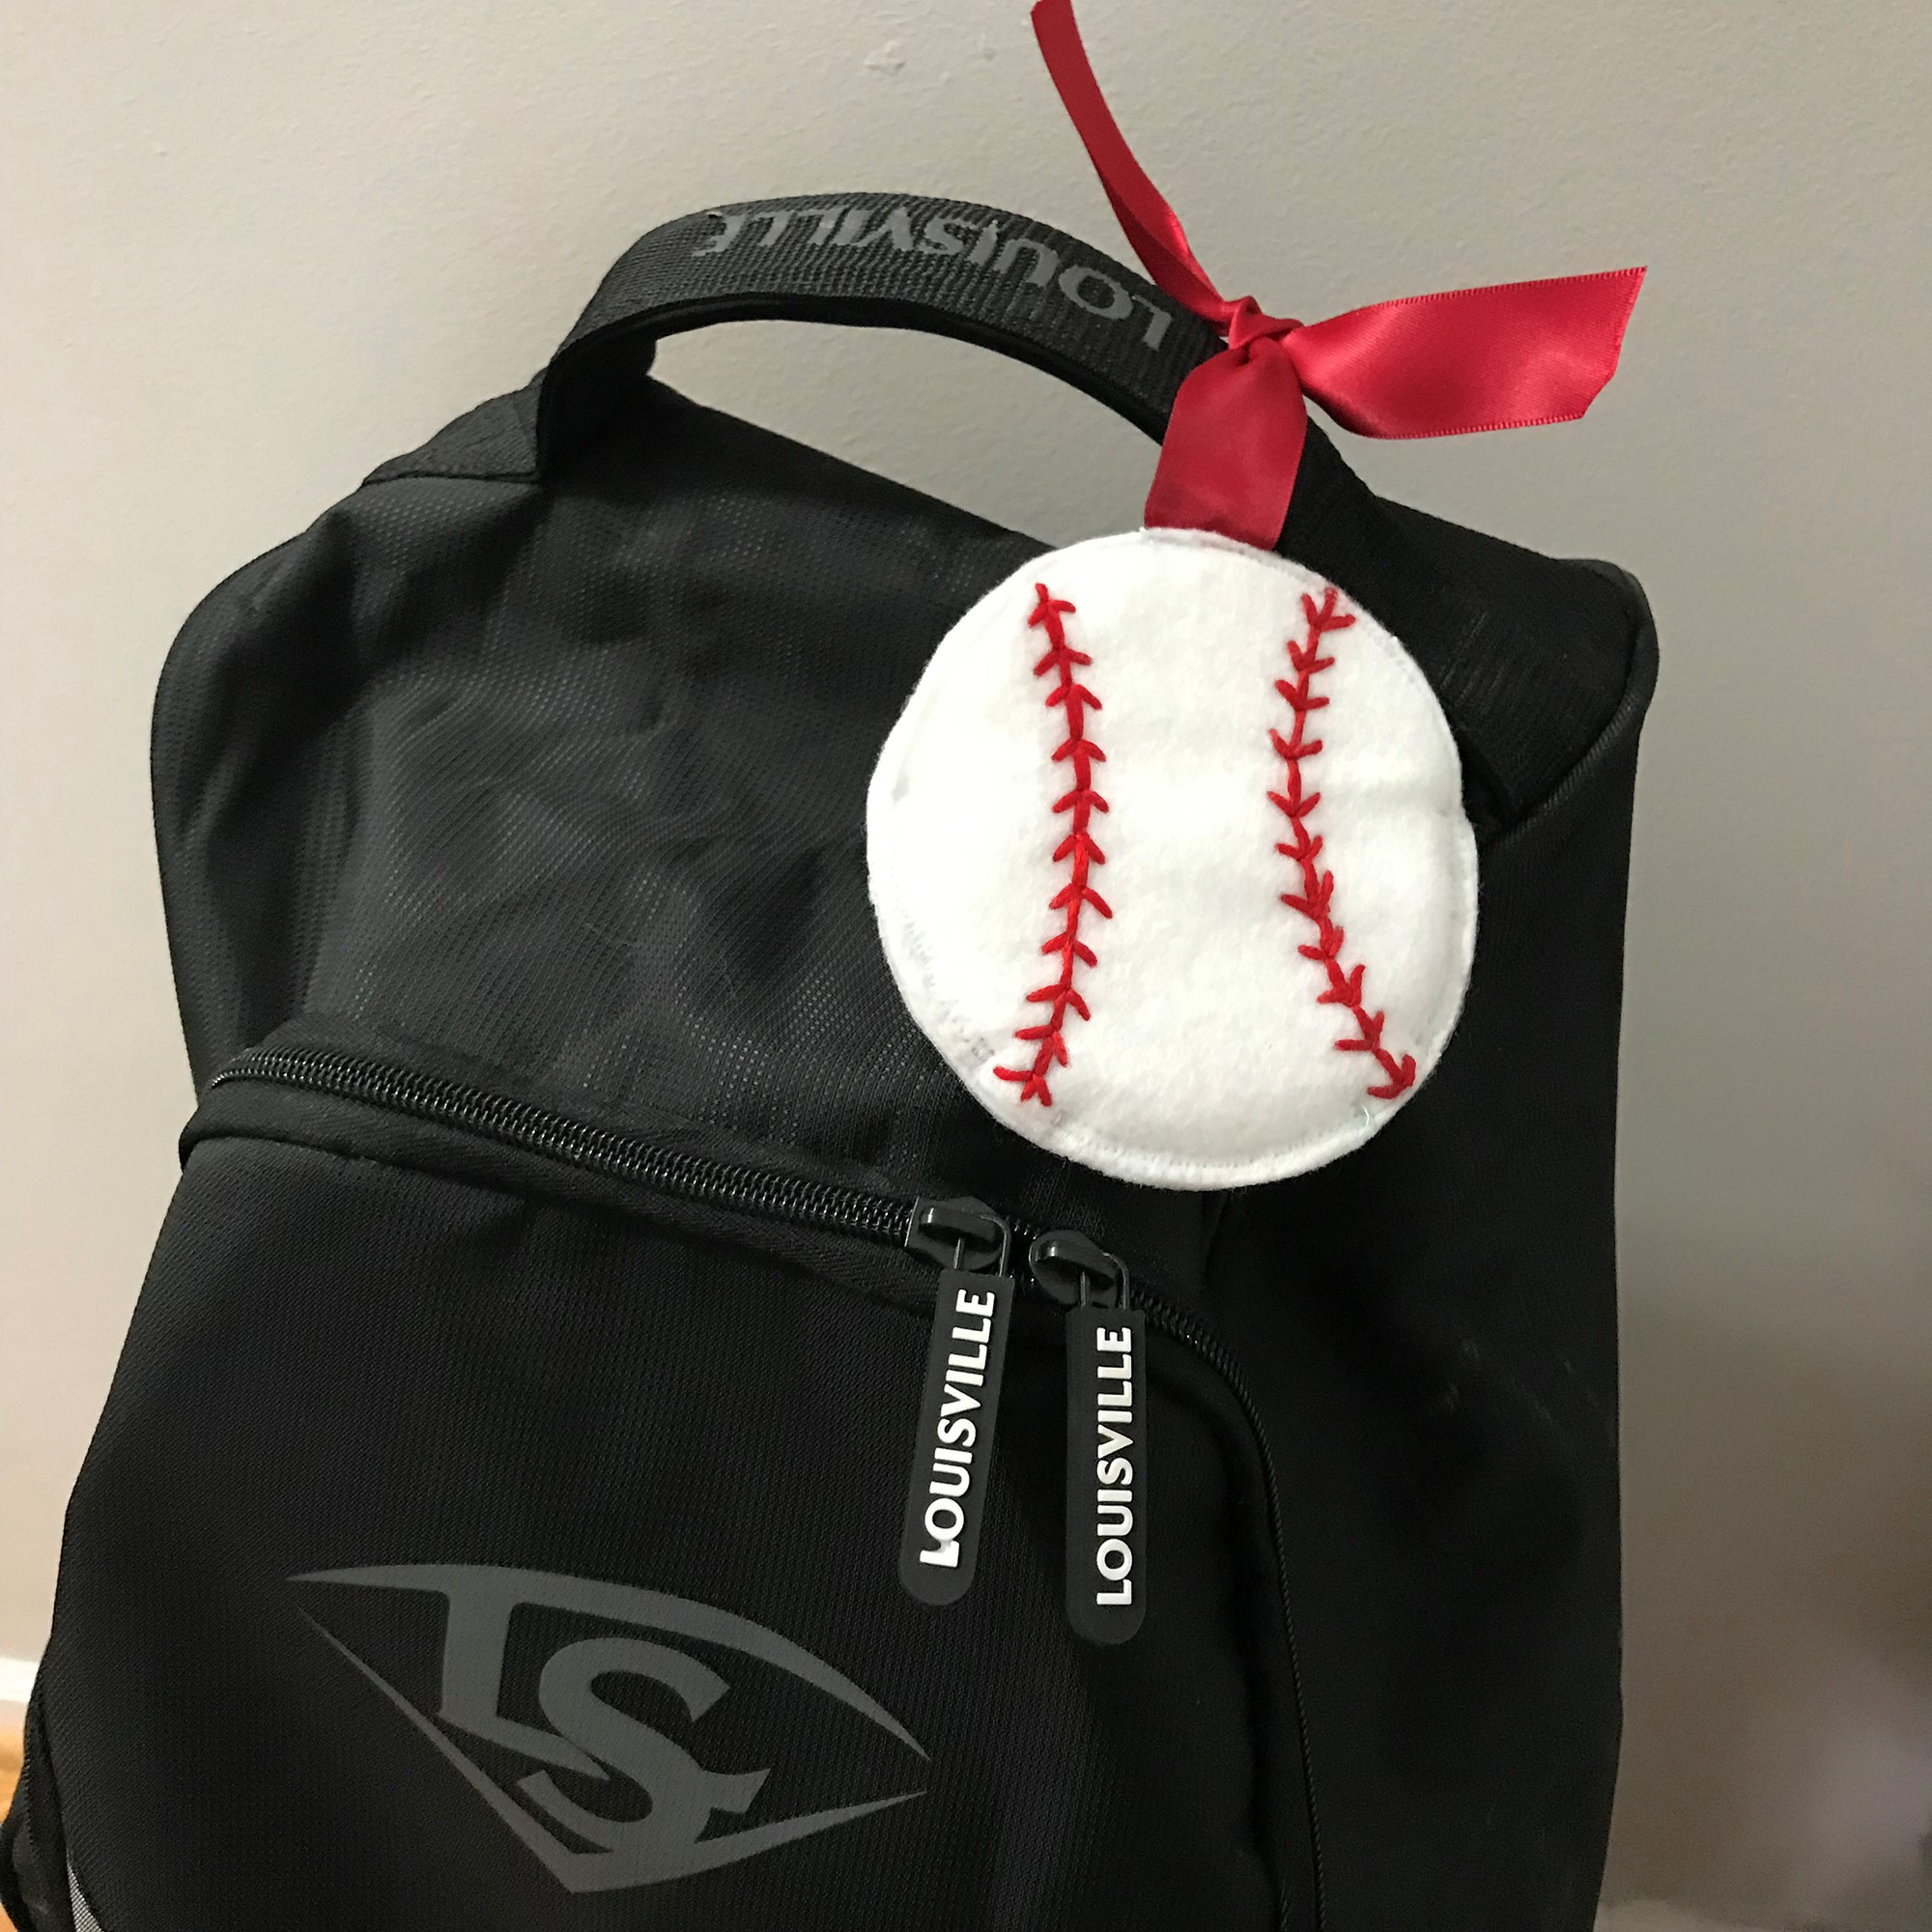 Baseball Luggage /& Bag Tag Personalized Baseball Stitches No Personalization on Back LARGE